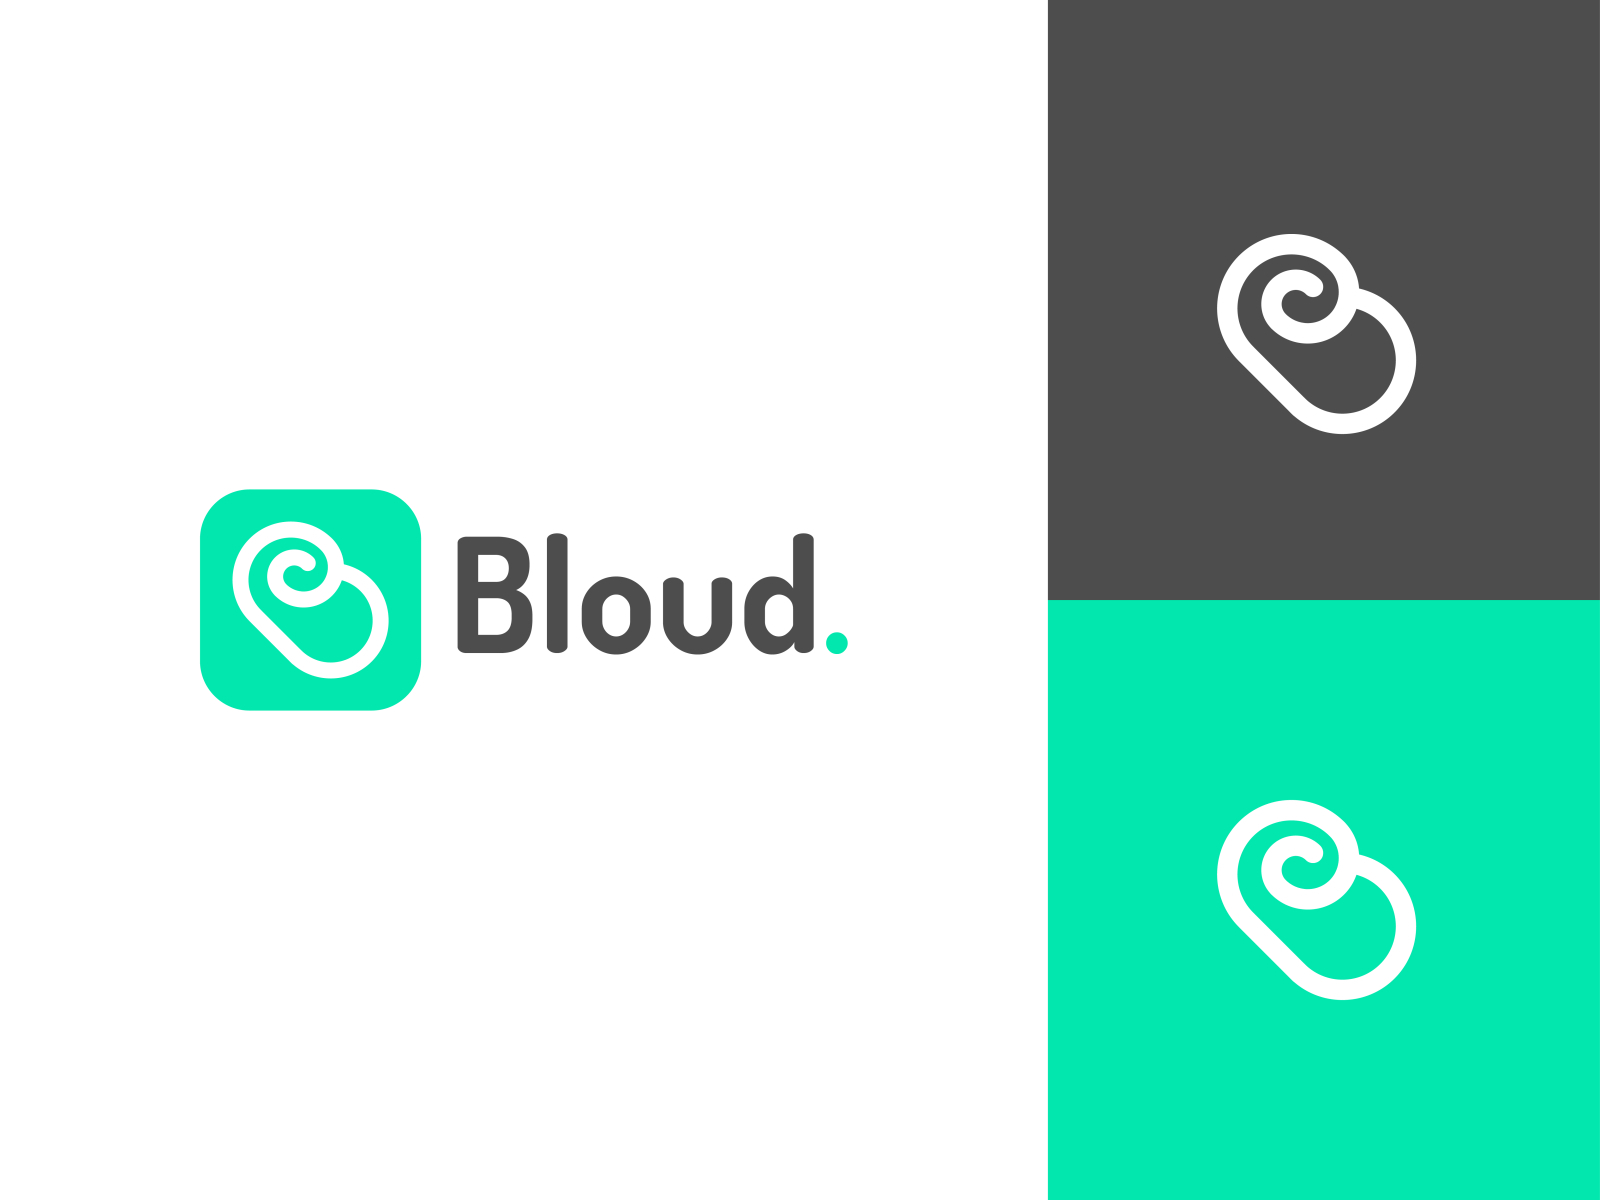 Bloud - Logo Design by Zubair Shahid on Dribbble